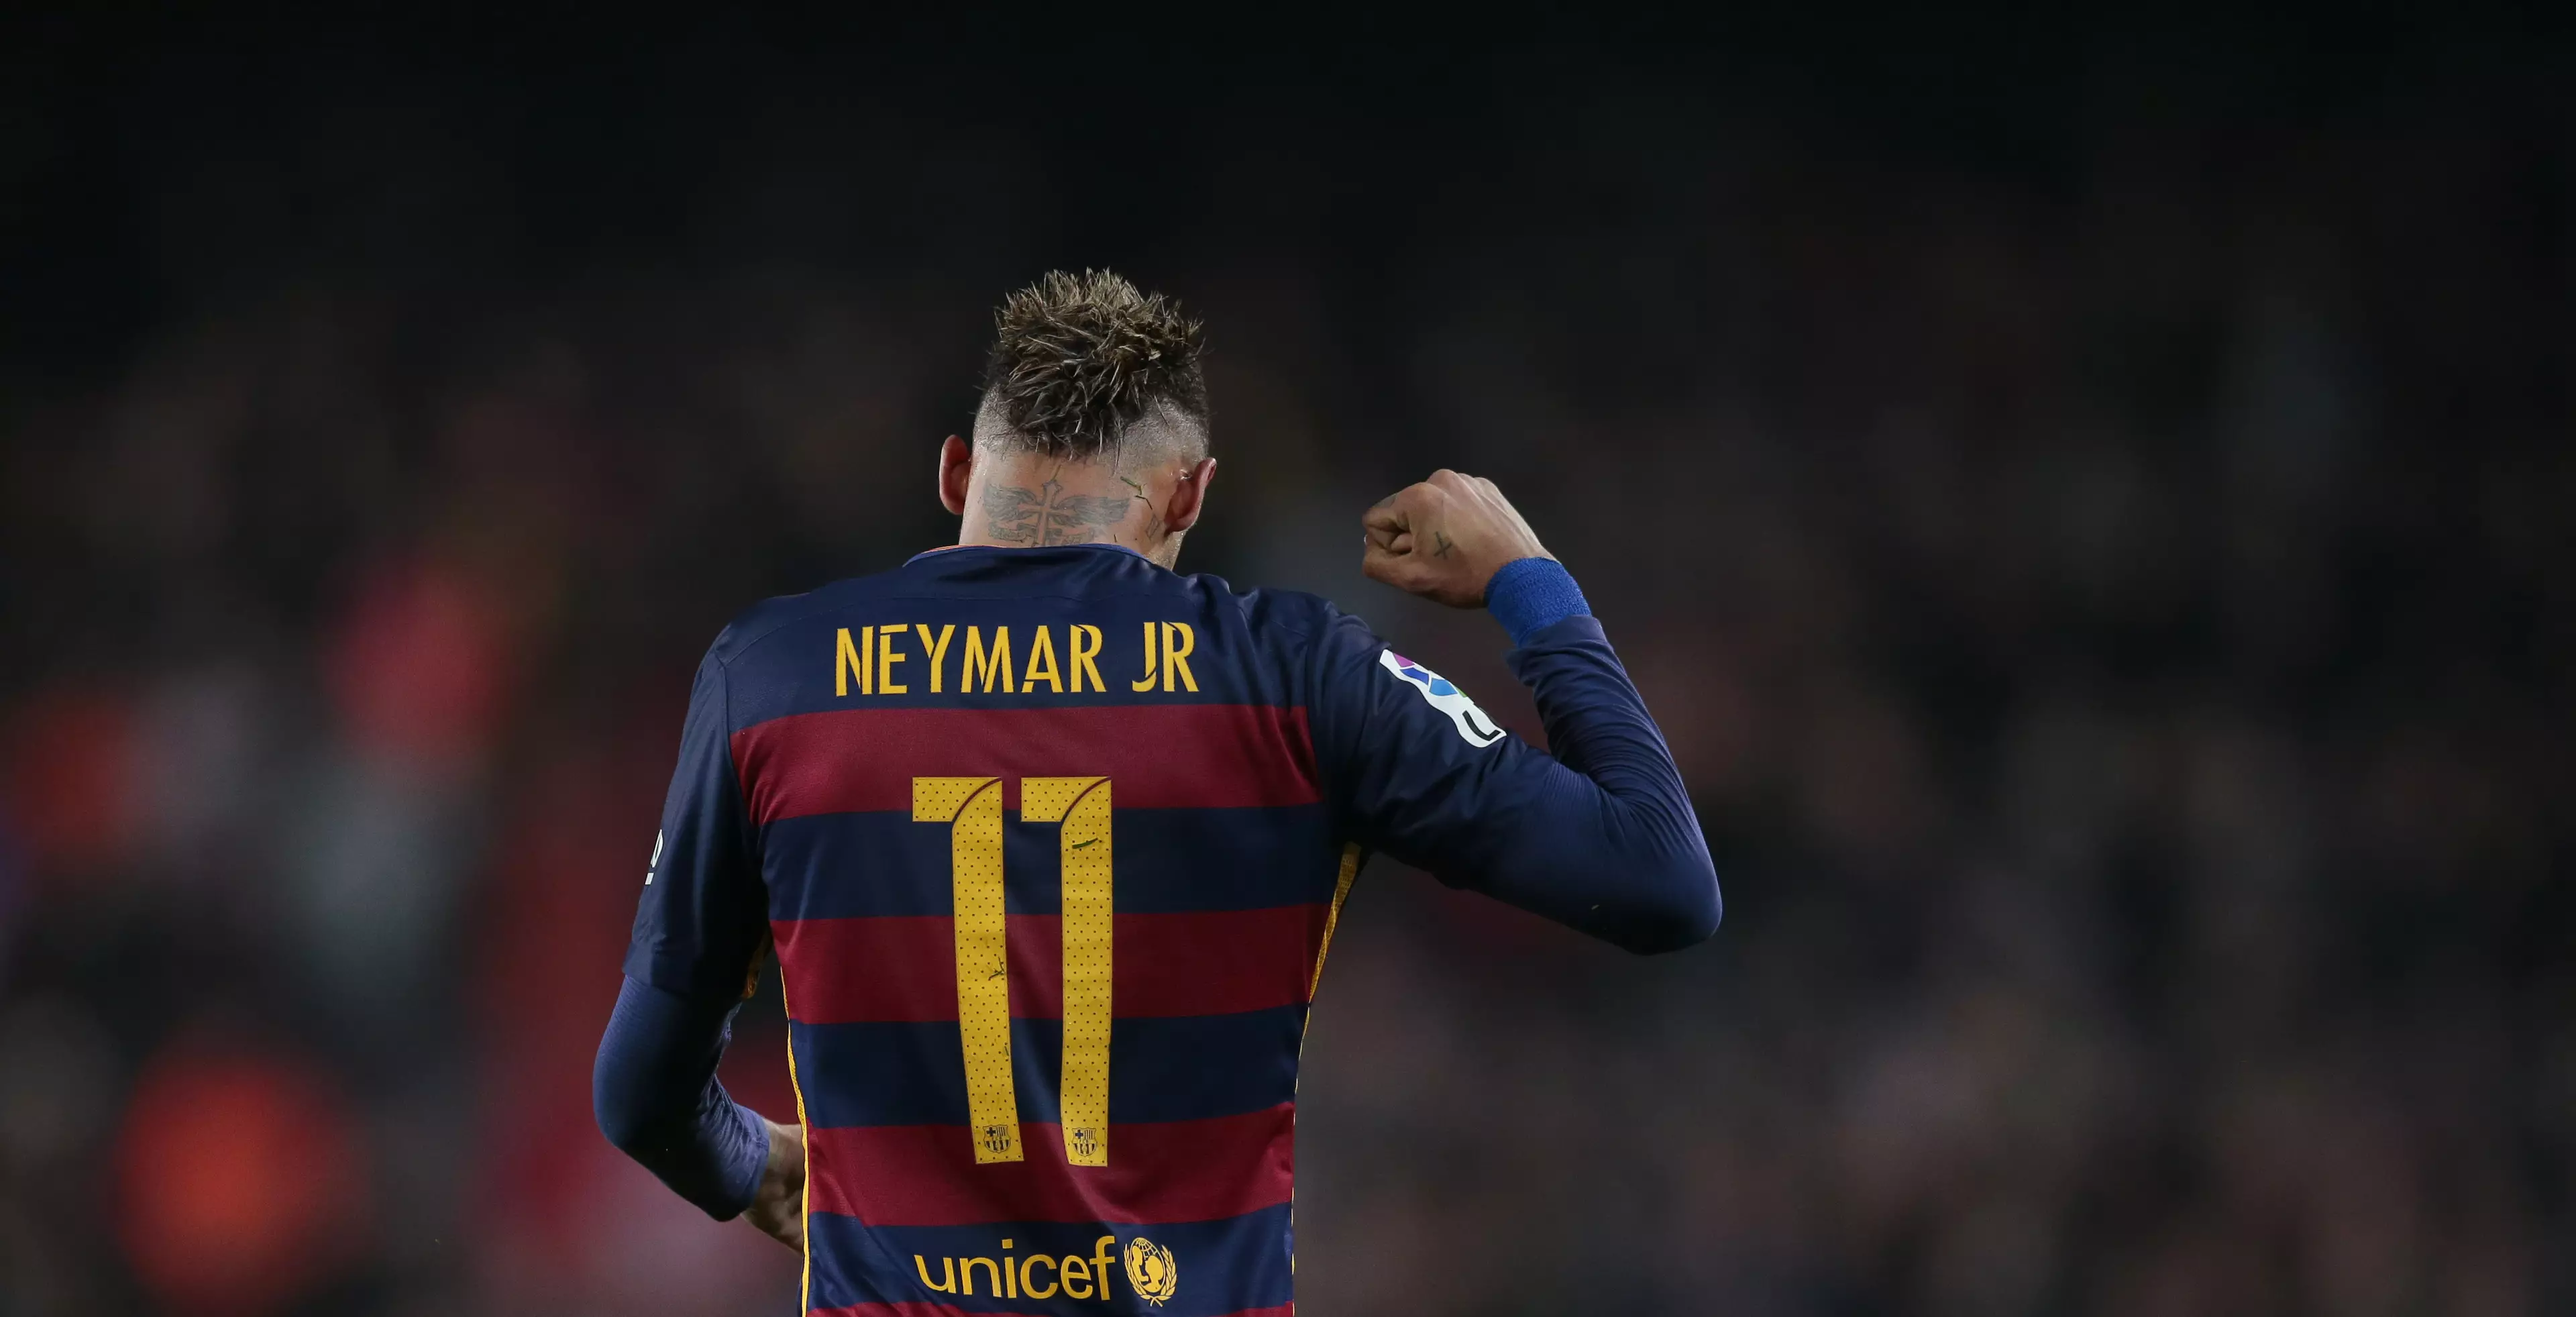 Odds On Neymar Breaking Pogba's Transfer Record In 2017 Slashed